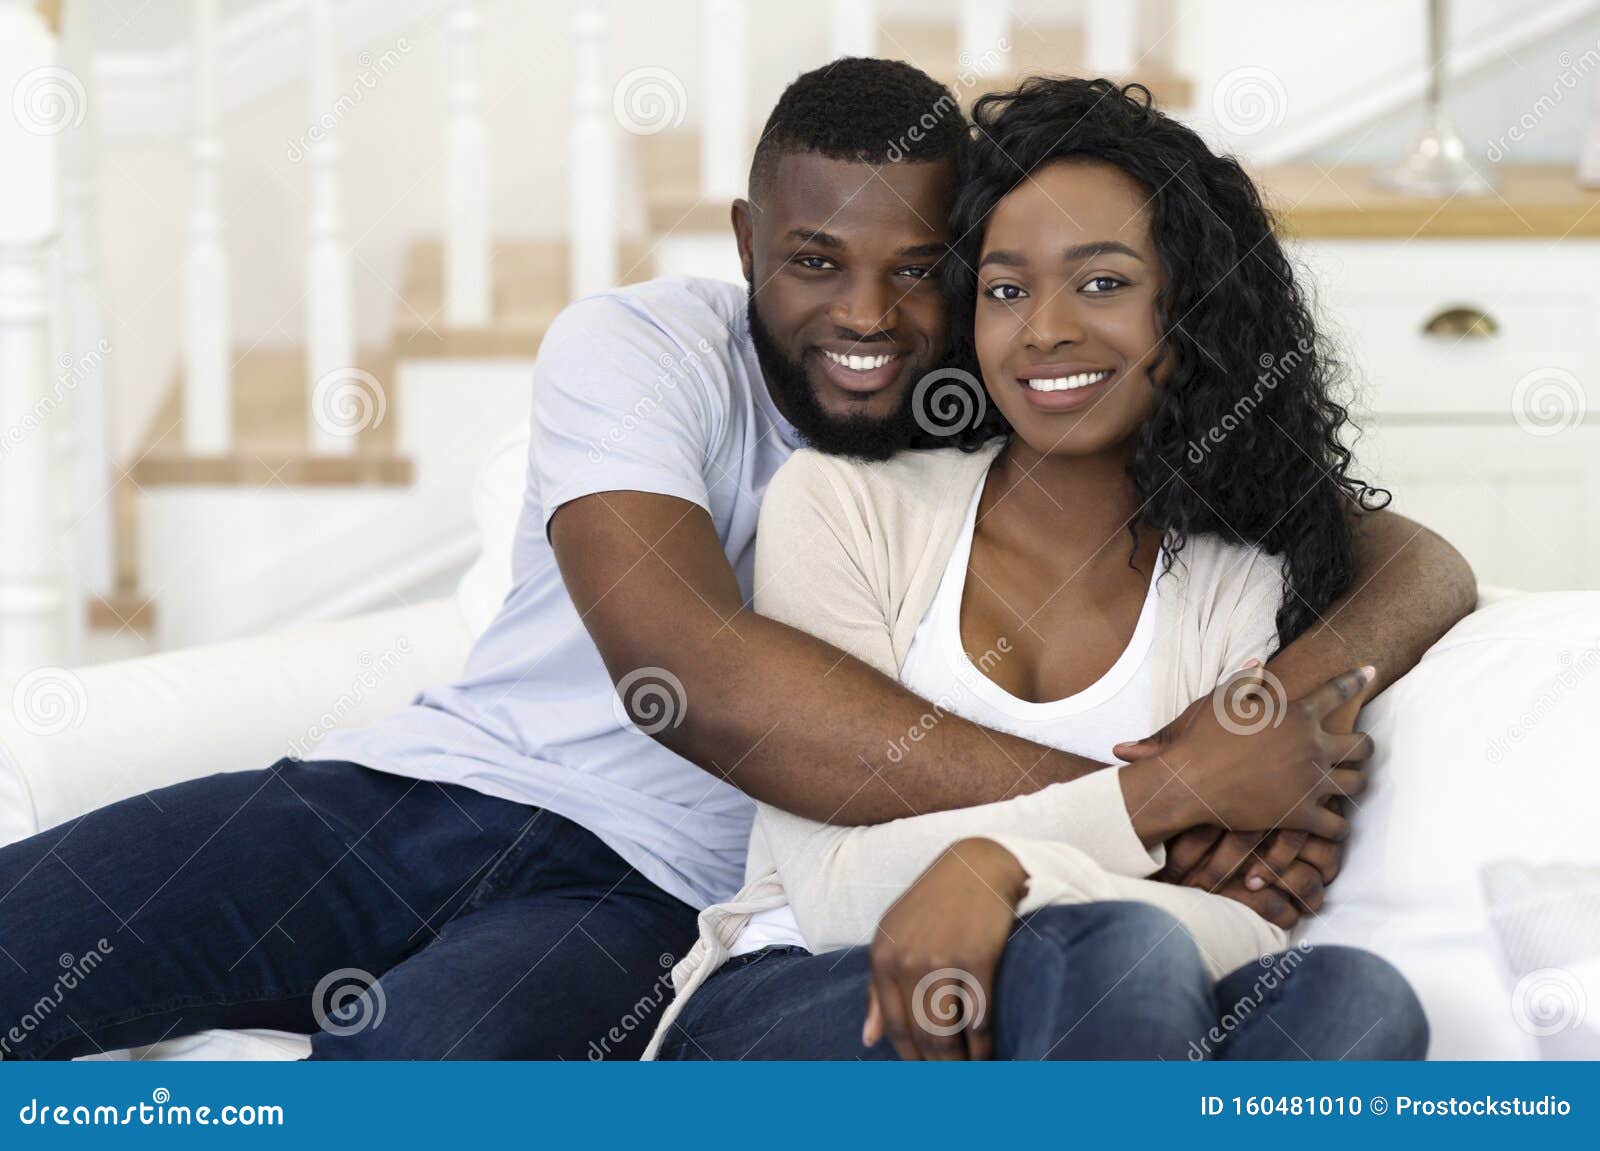 cj simon recommends wifes love black pic